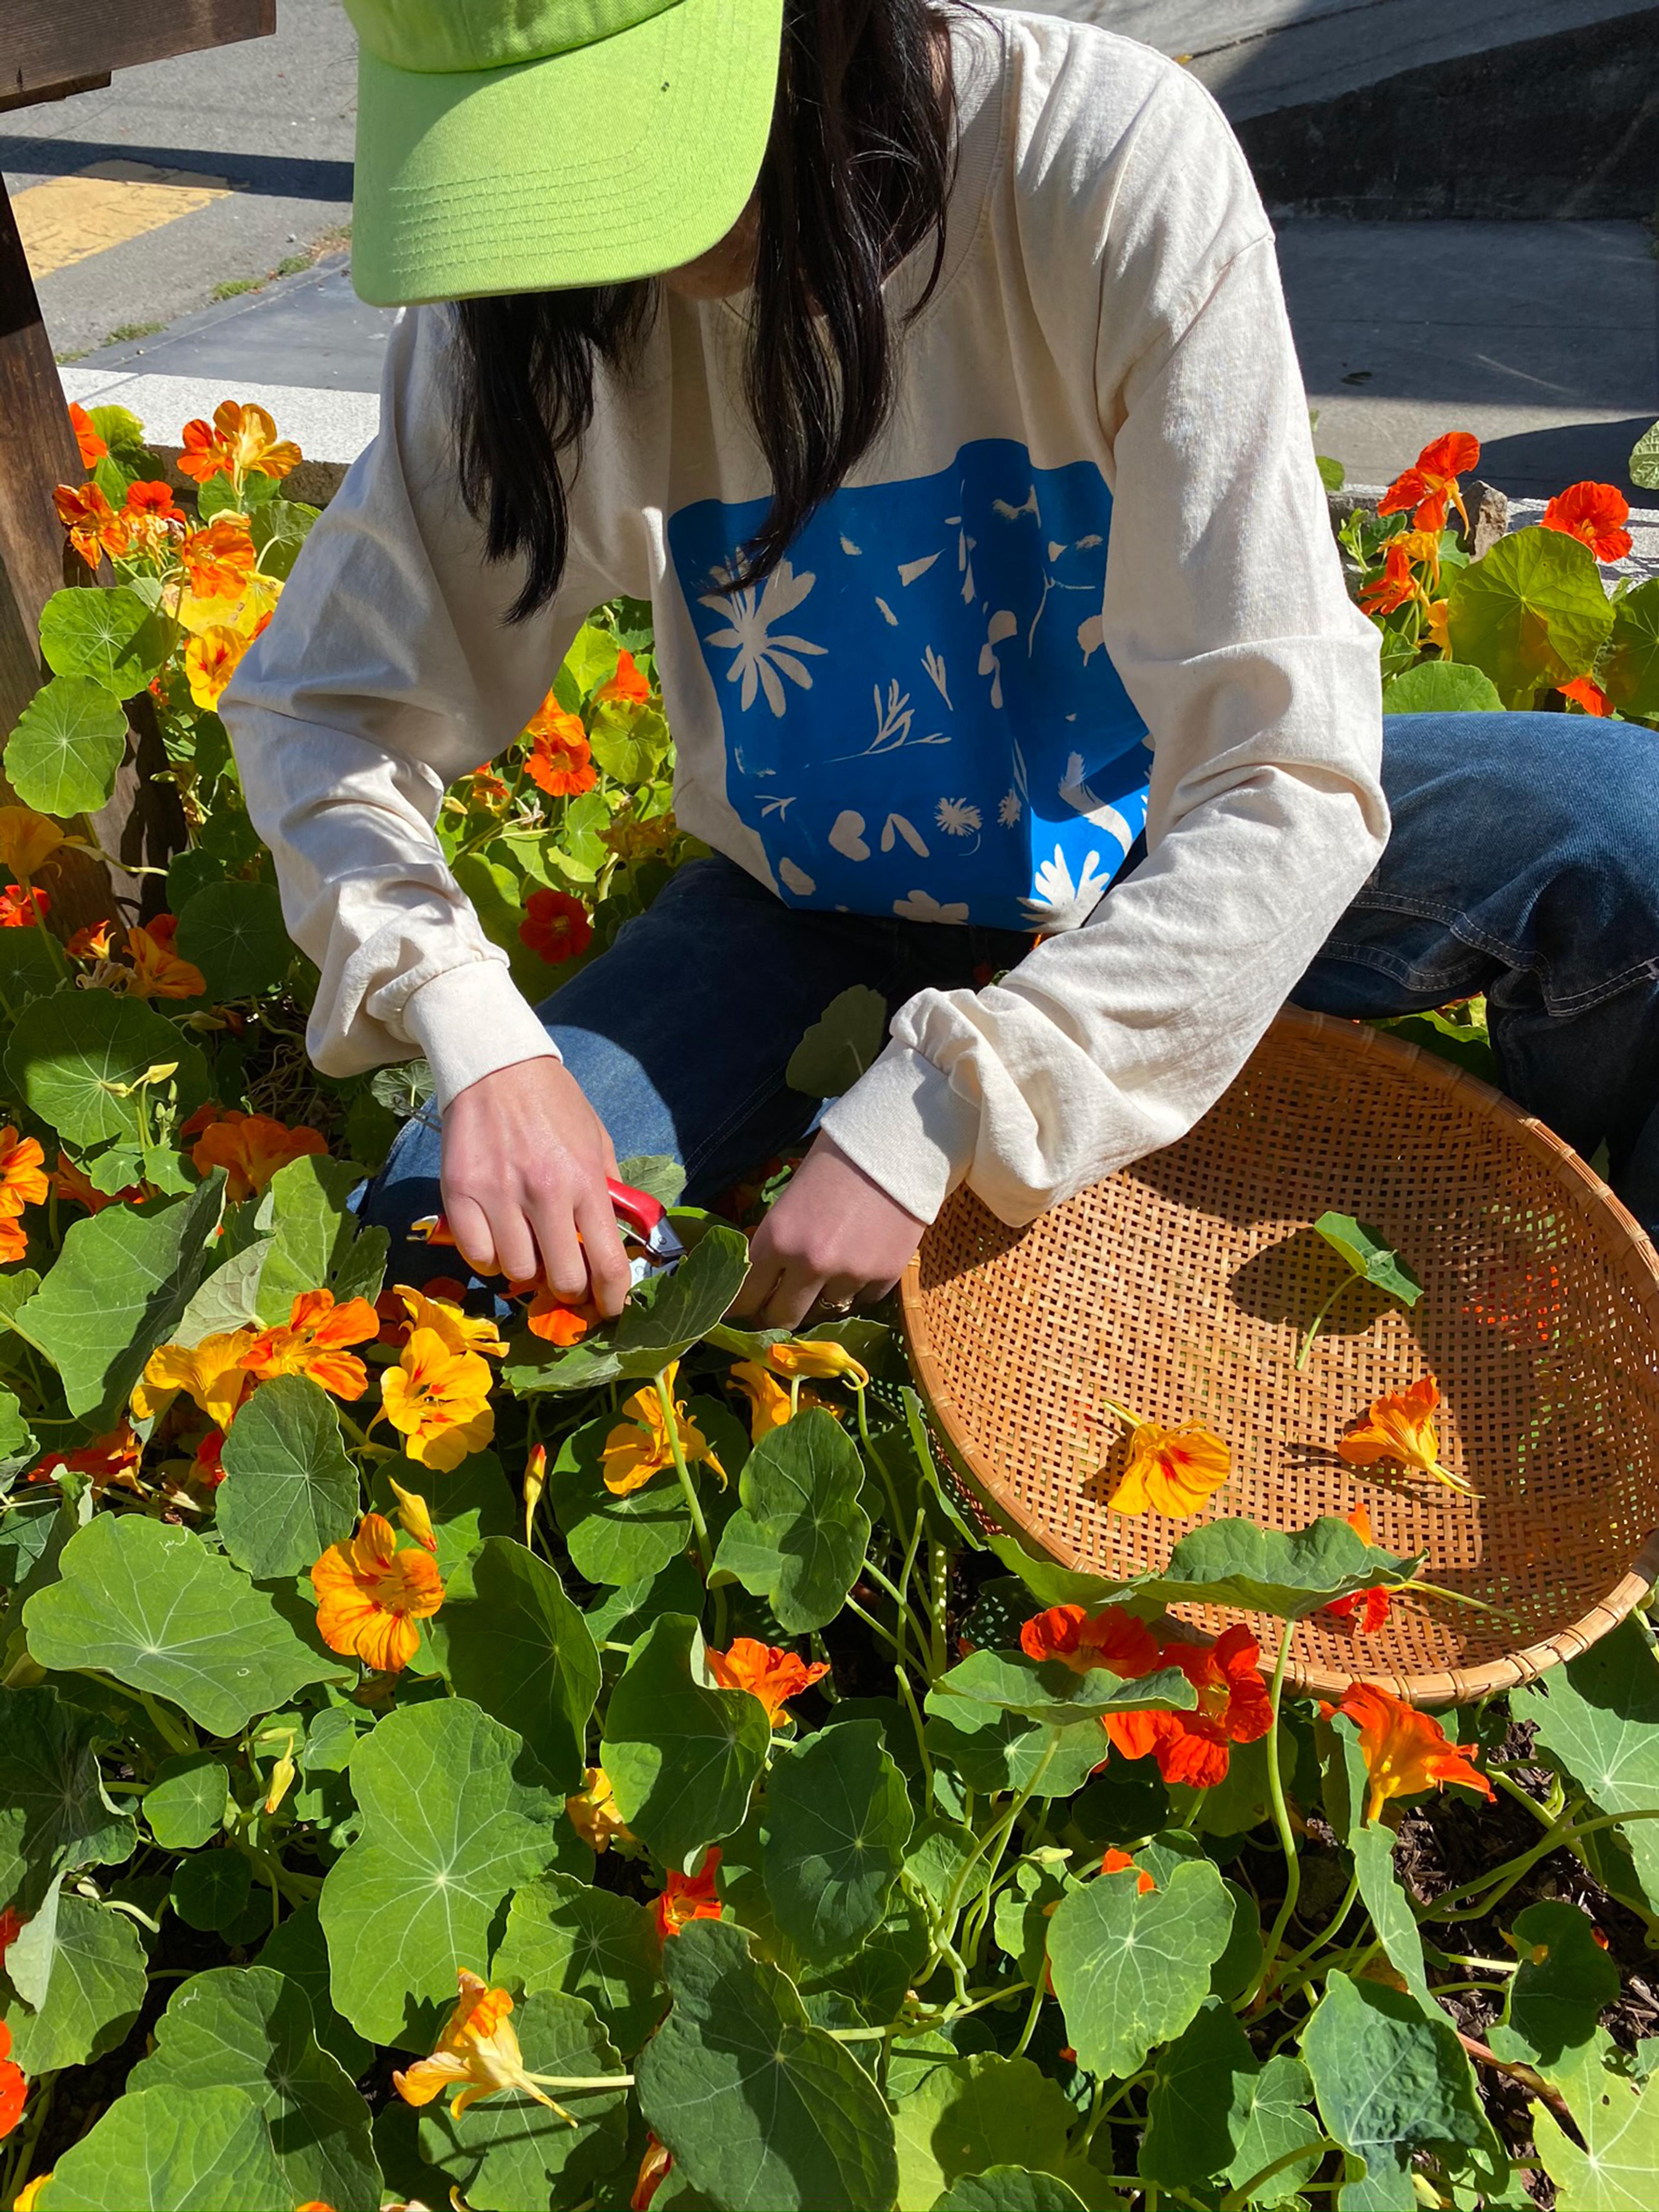 Person harvesting orange flowers.